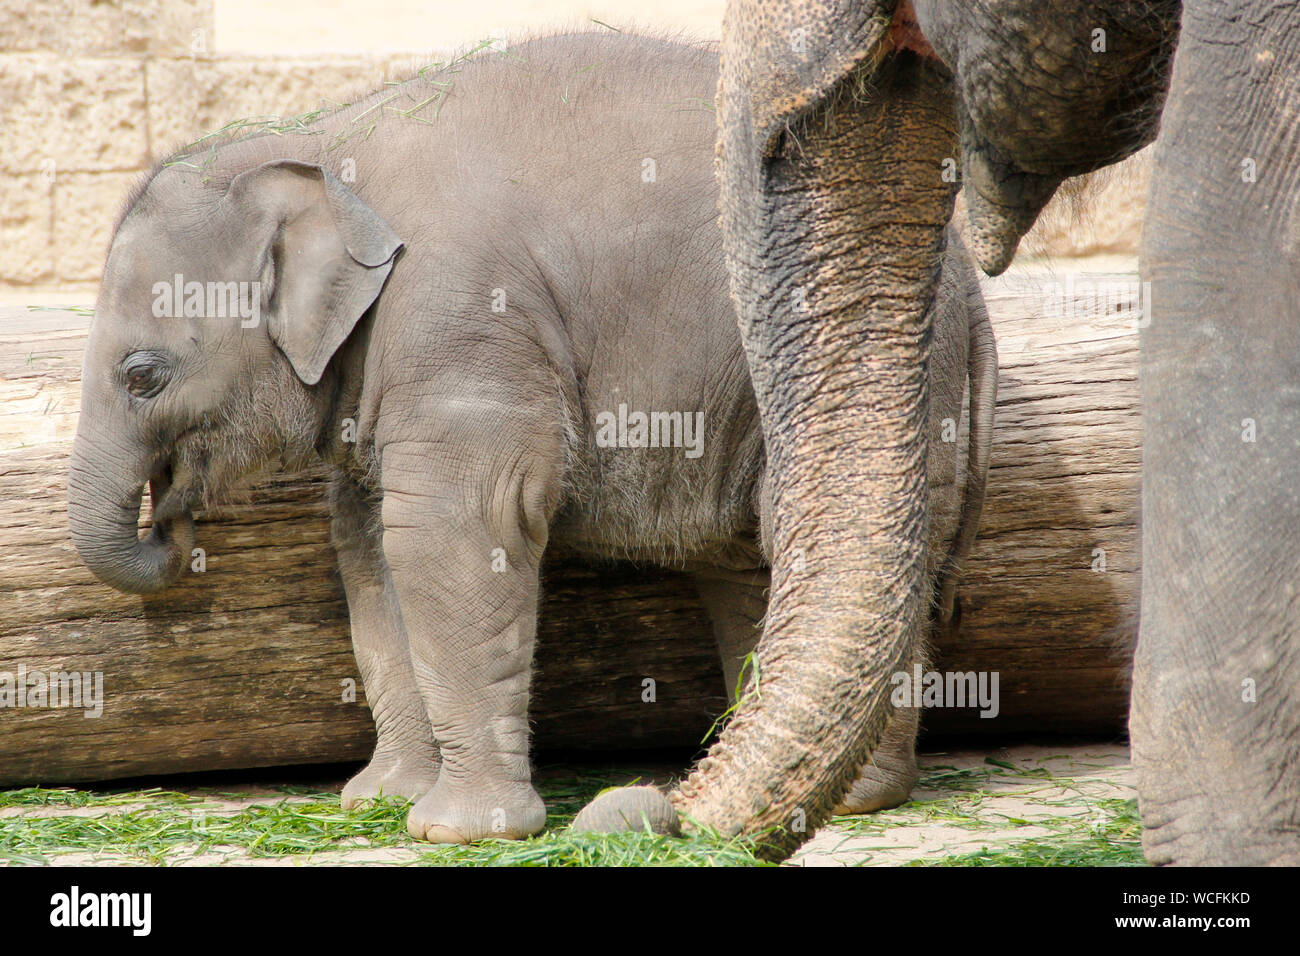 Little elefante indiano giocando, latino Elephas maximus indicus Foto Stock